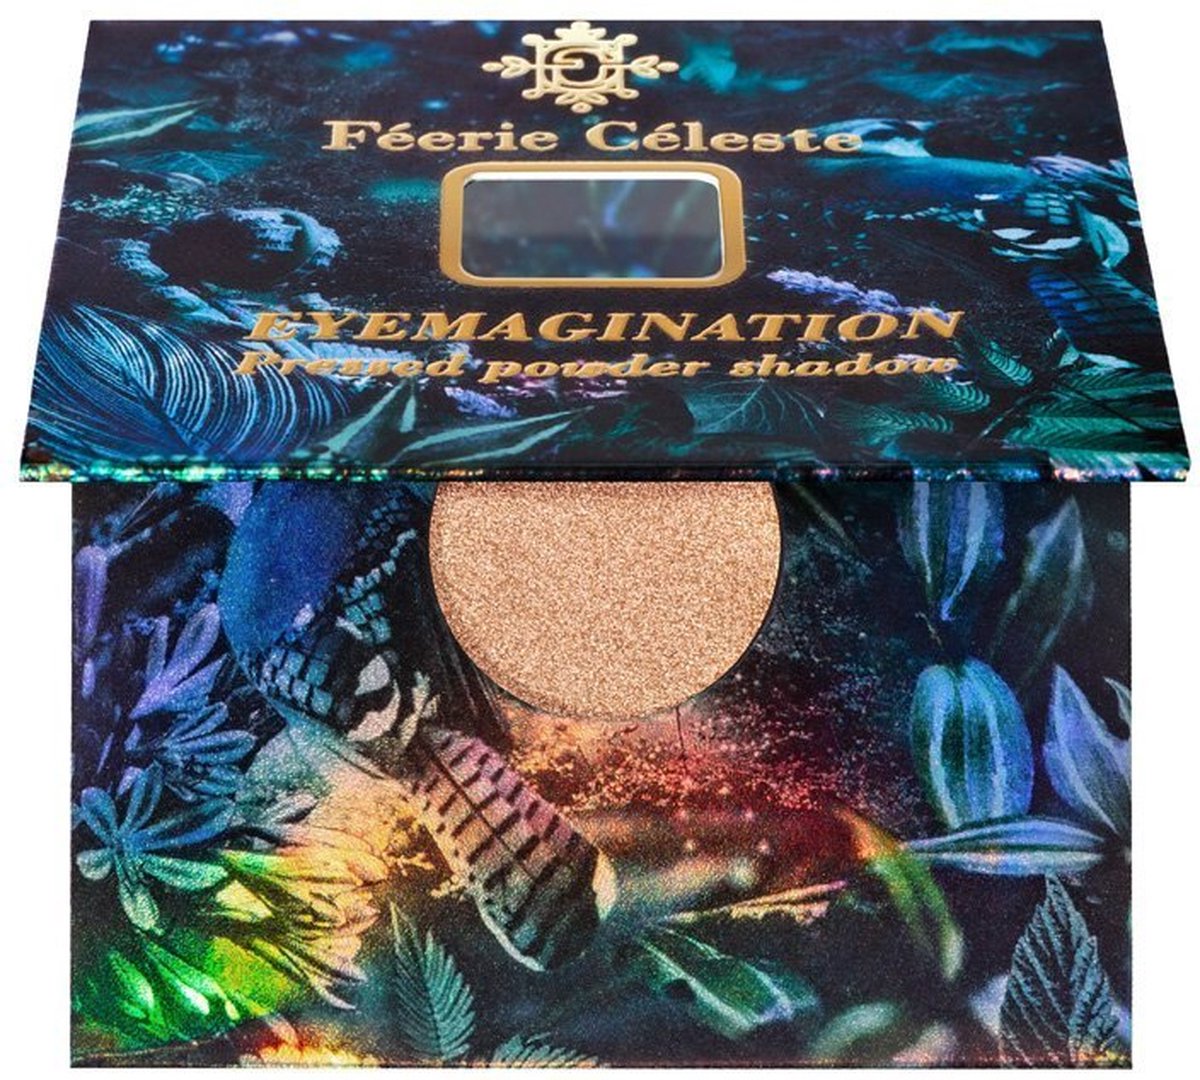 Pigmentallic Oogschaduw pressed metallic eyeshadow PG166 Refulgent Gold 1.2g